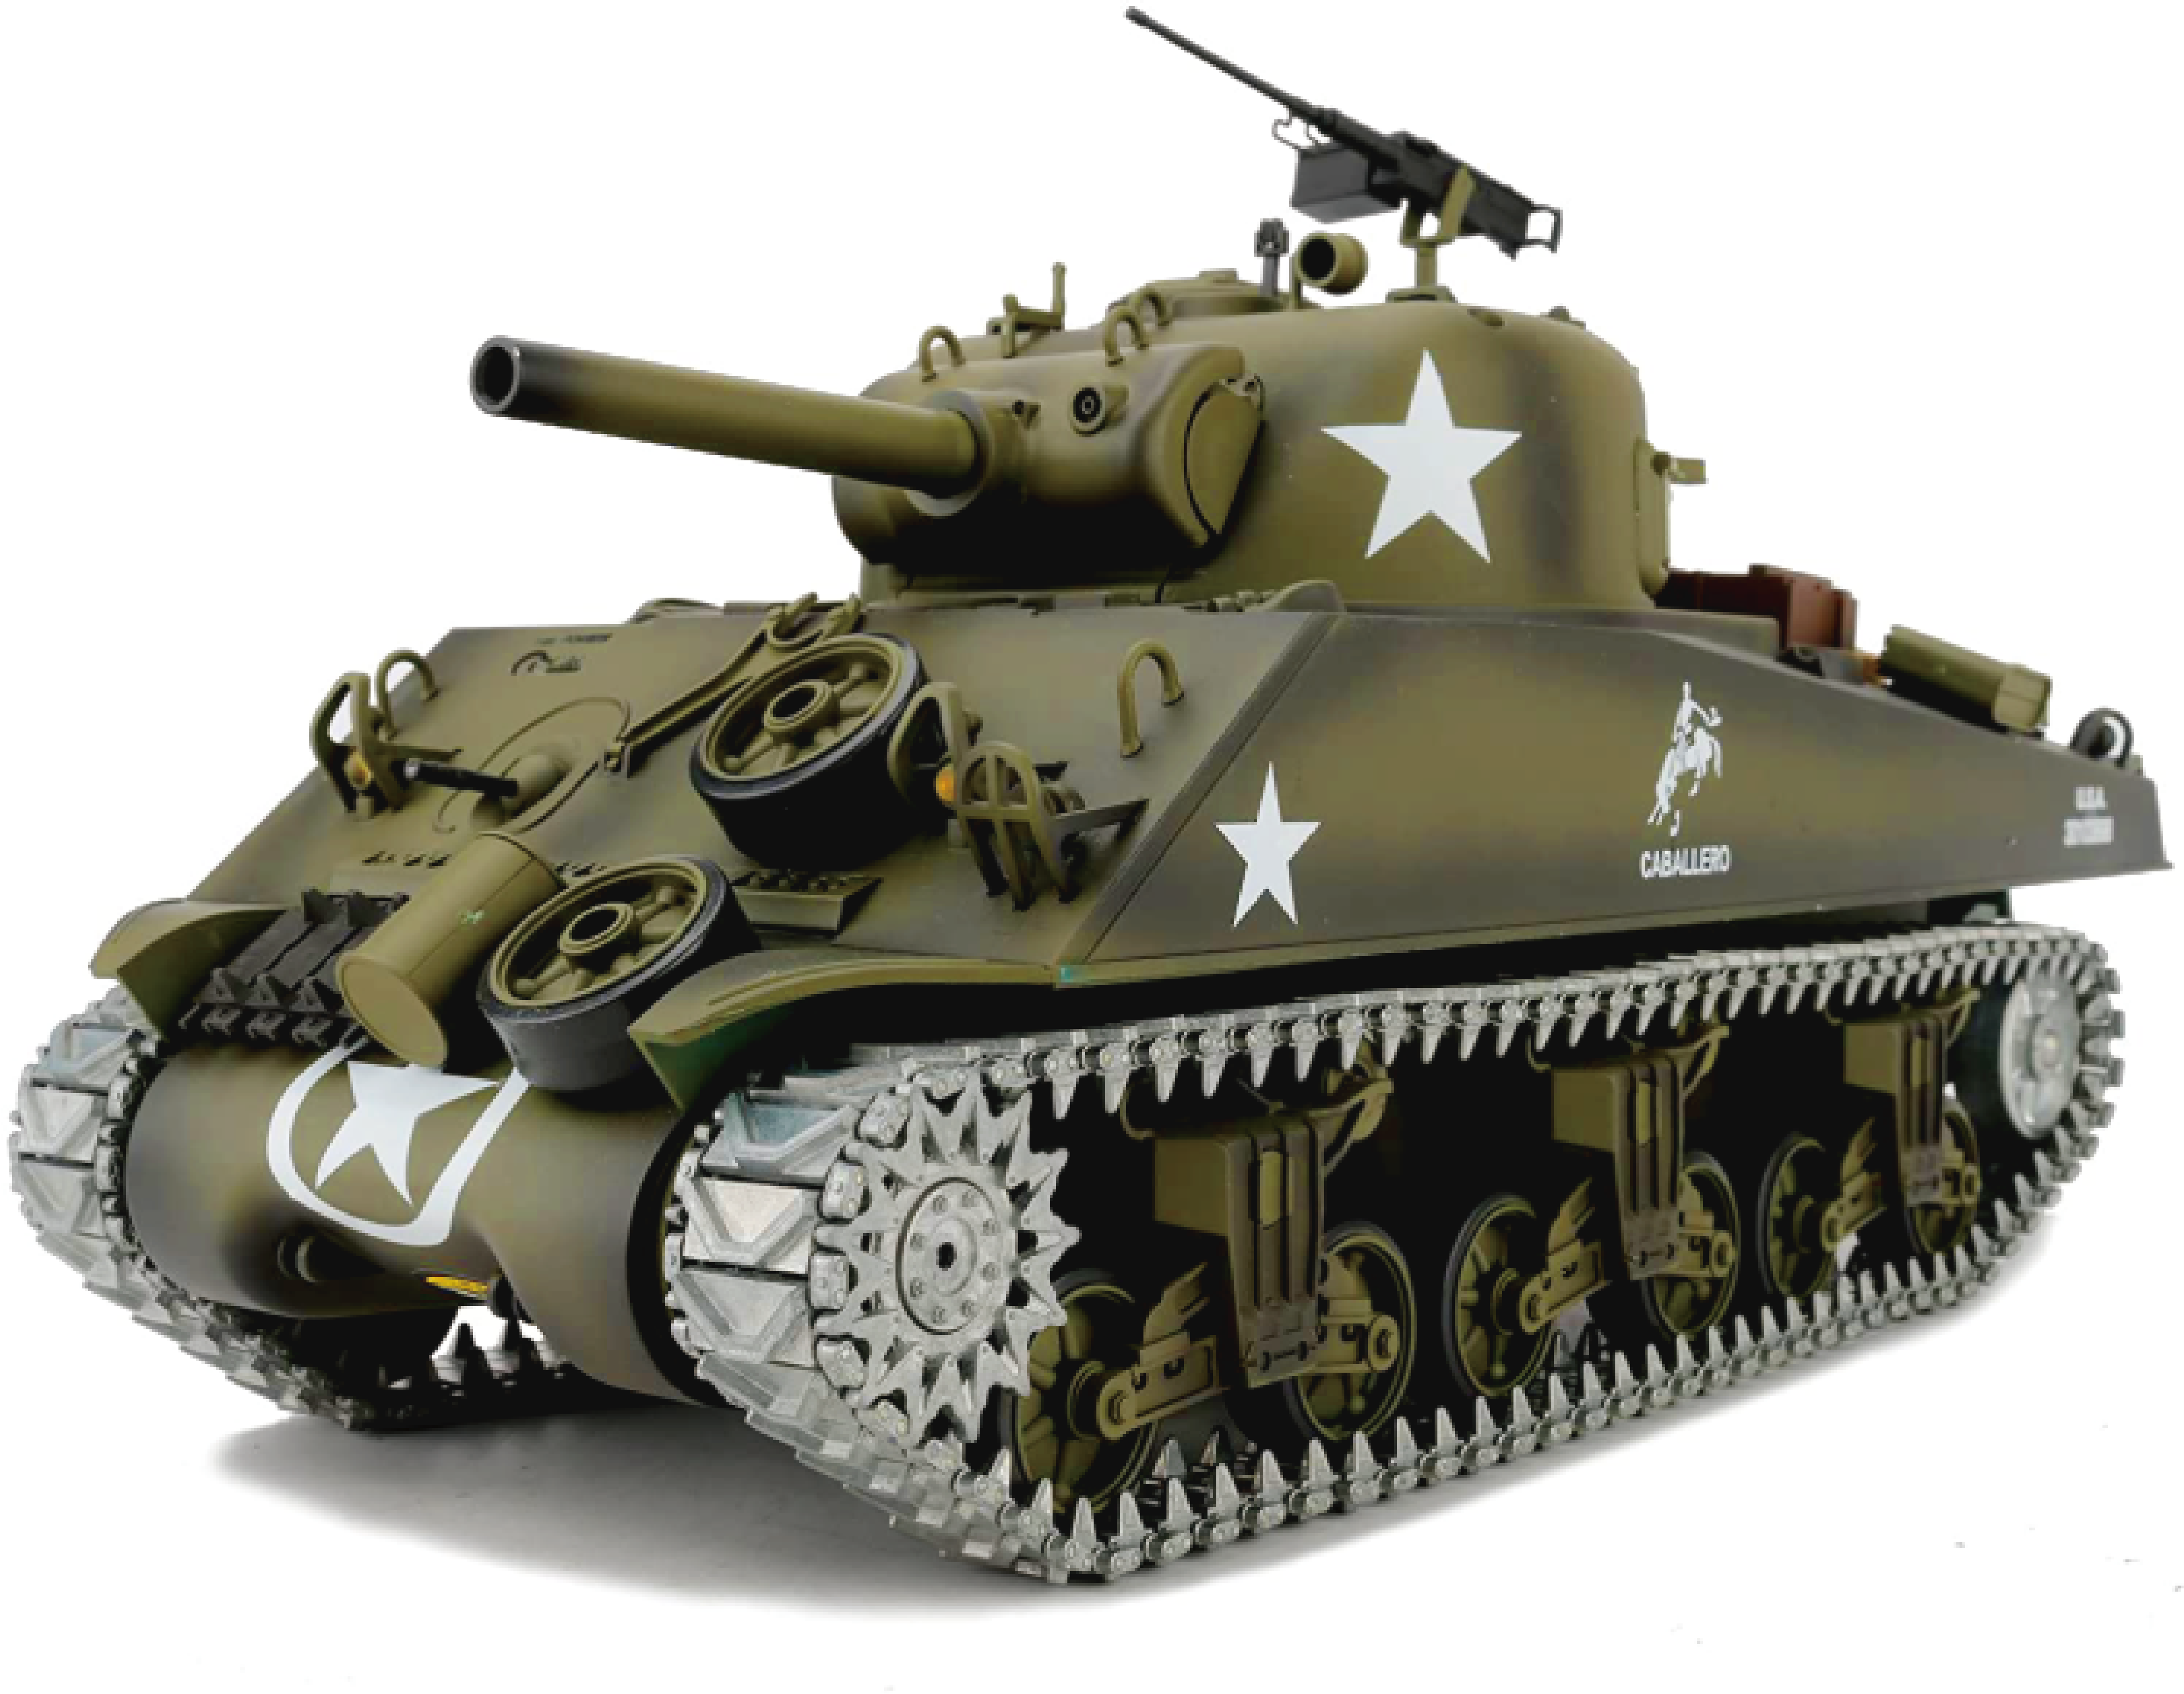 02-21-09 025, Pihl Logging Yarders built on Sherman Tank ch…